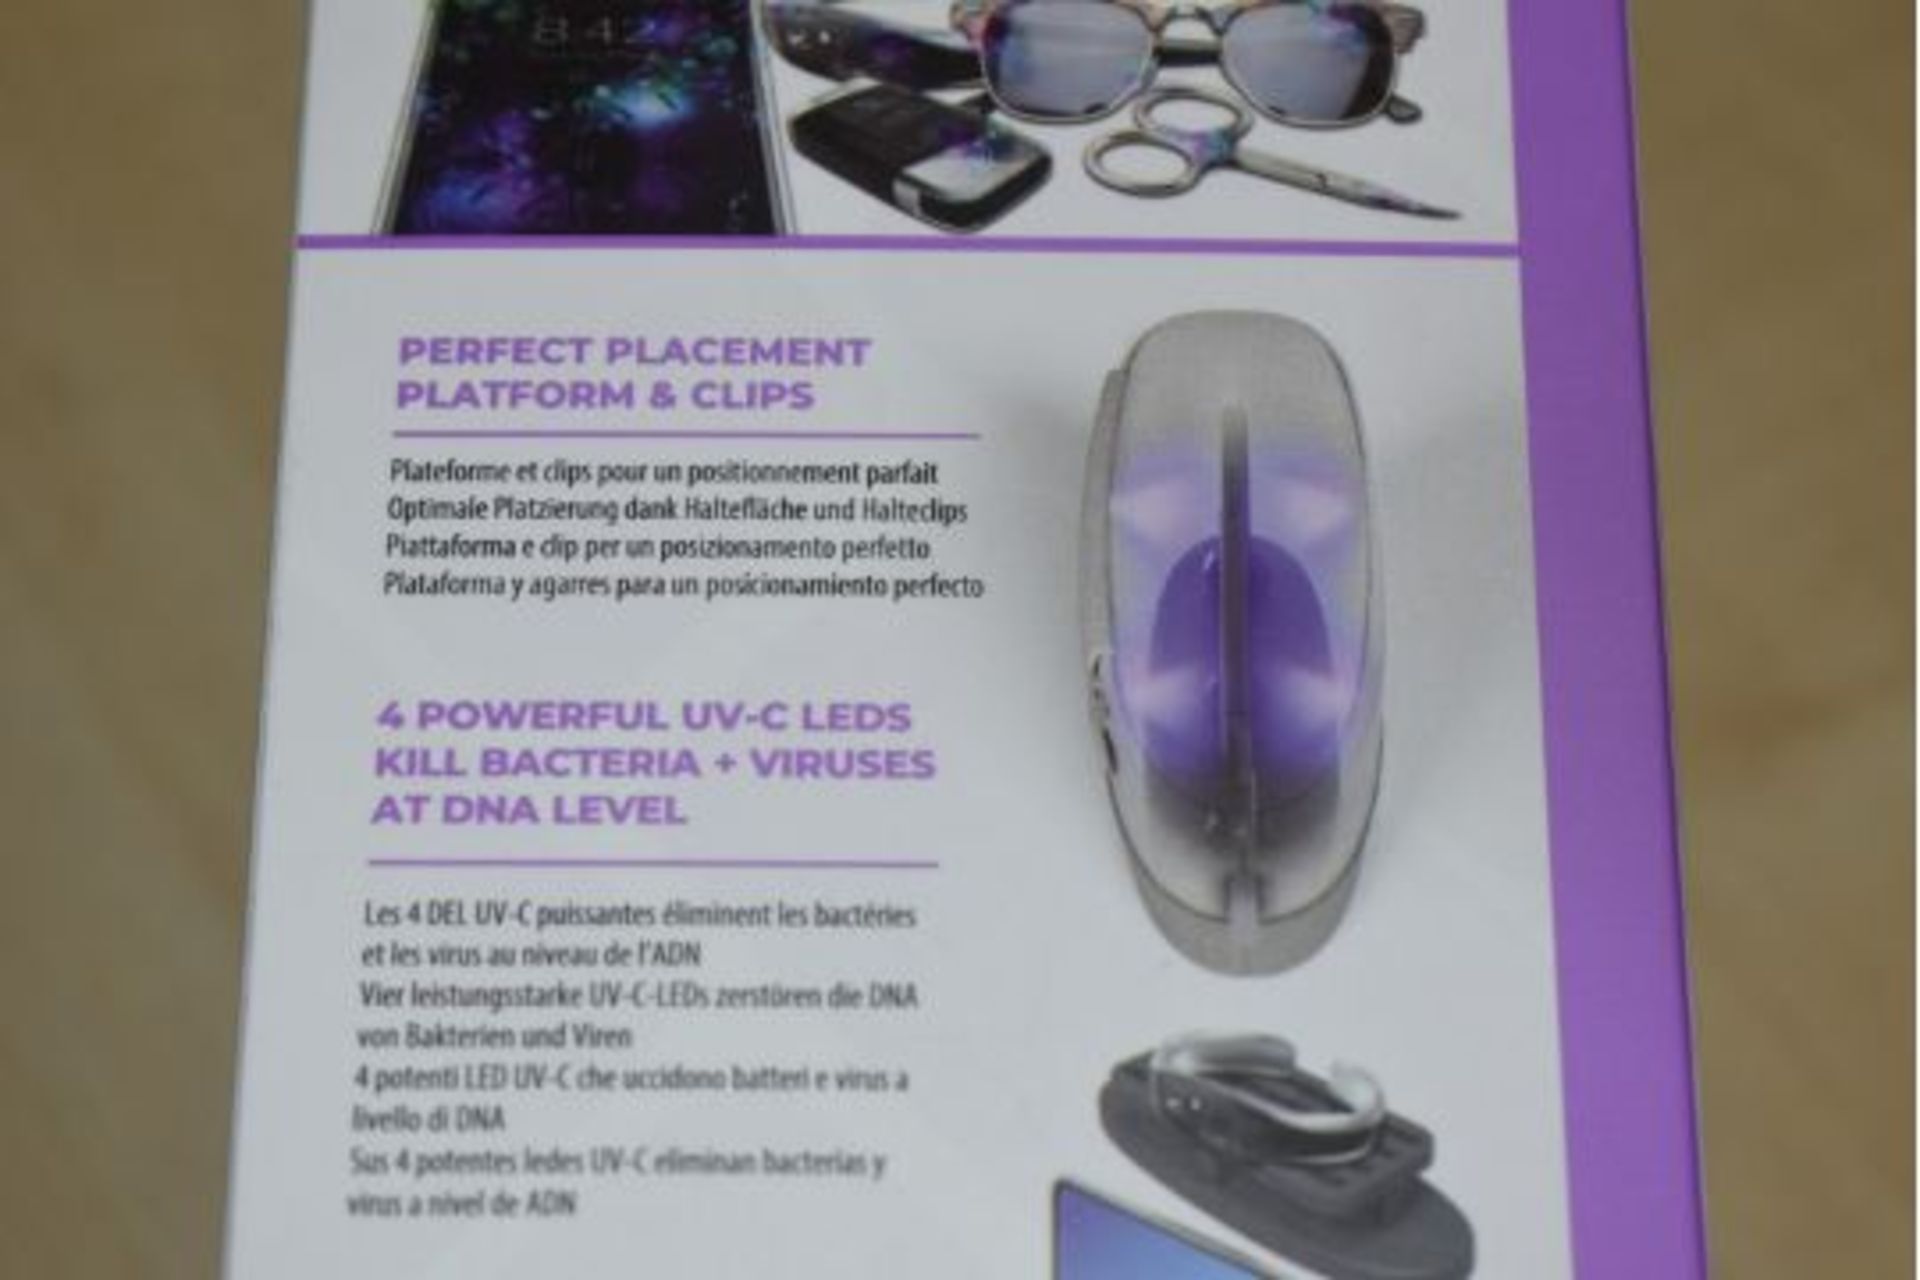 1 x Homedics UV Clean Portable Sanitiser Bag - Kills Upto 99.9% of Bacteria & Viruses in Just 60 - Image 13 of 24